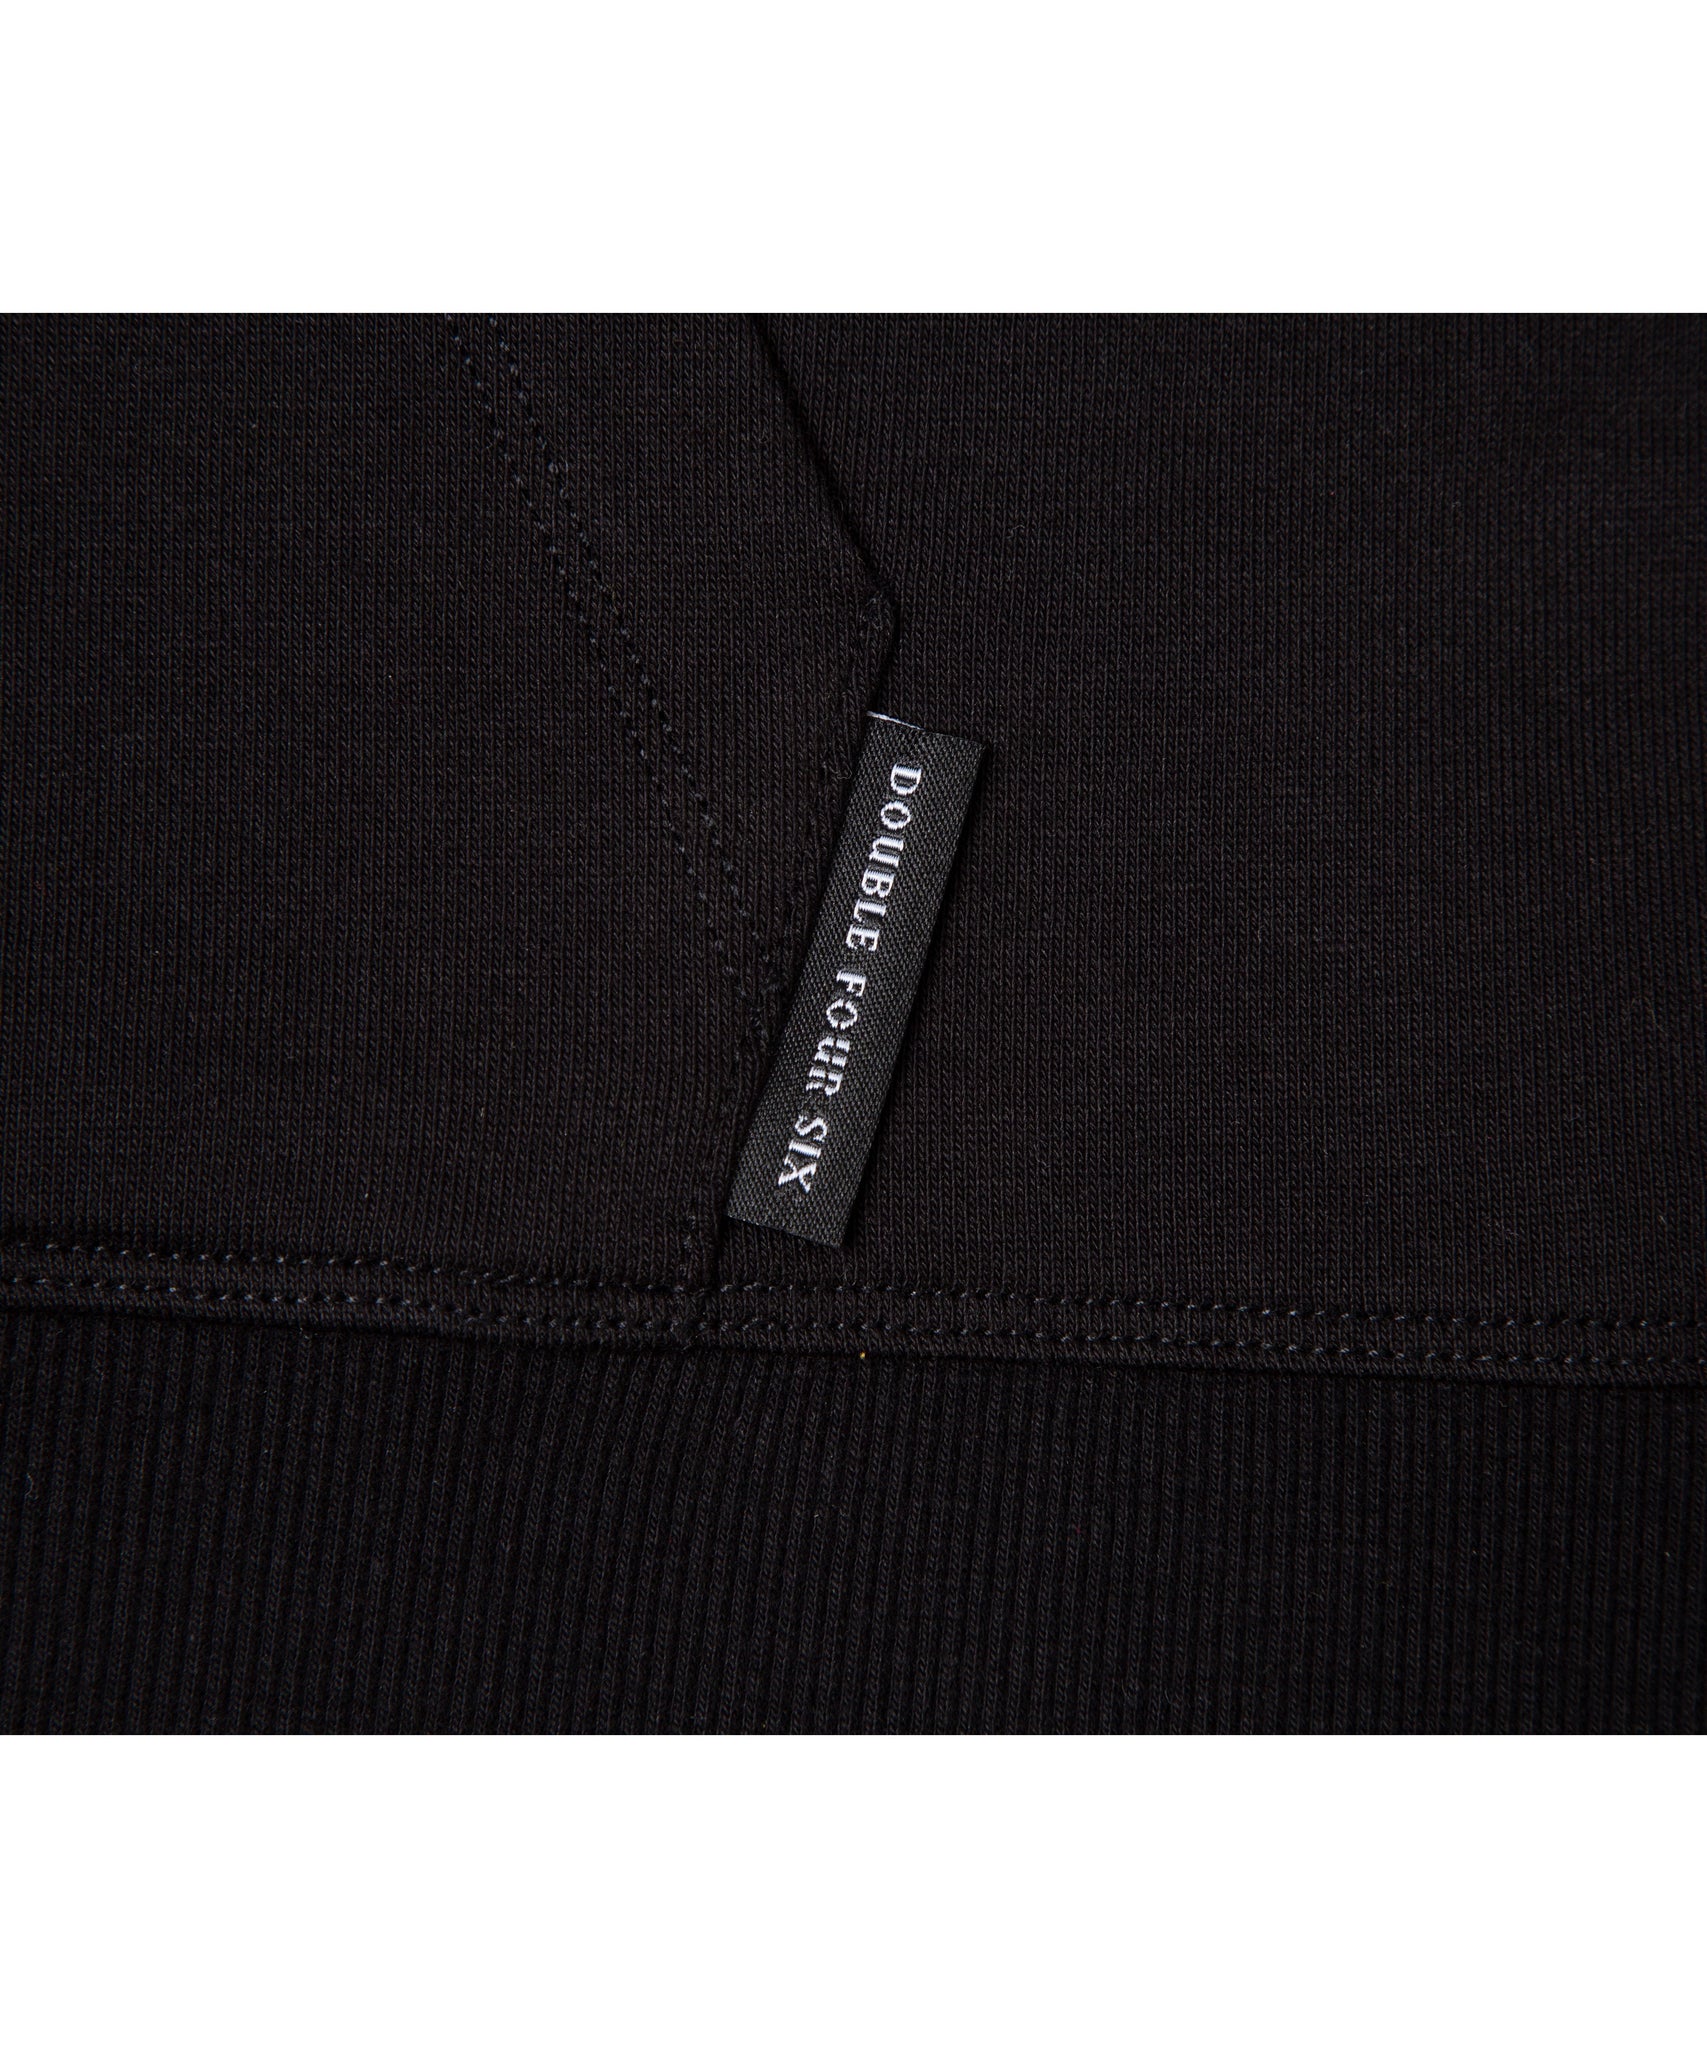 446  Sleeve Sweatshirts Black